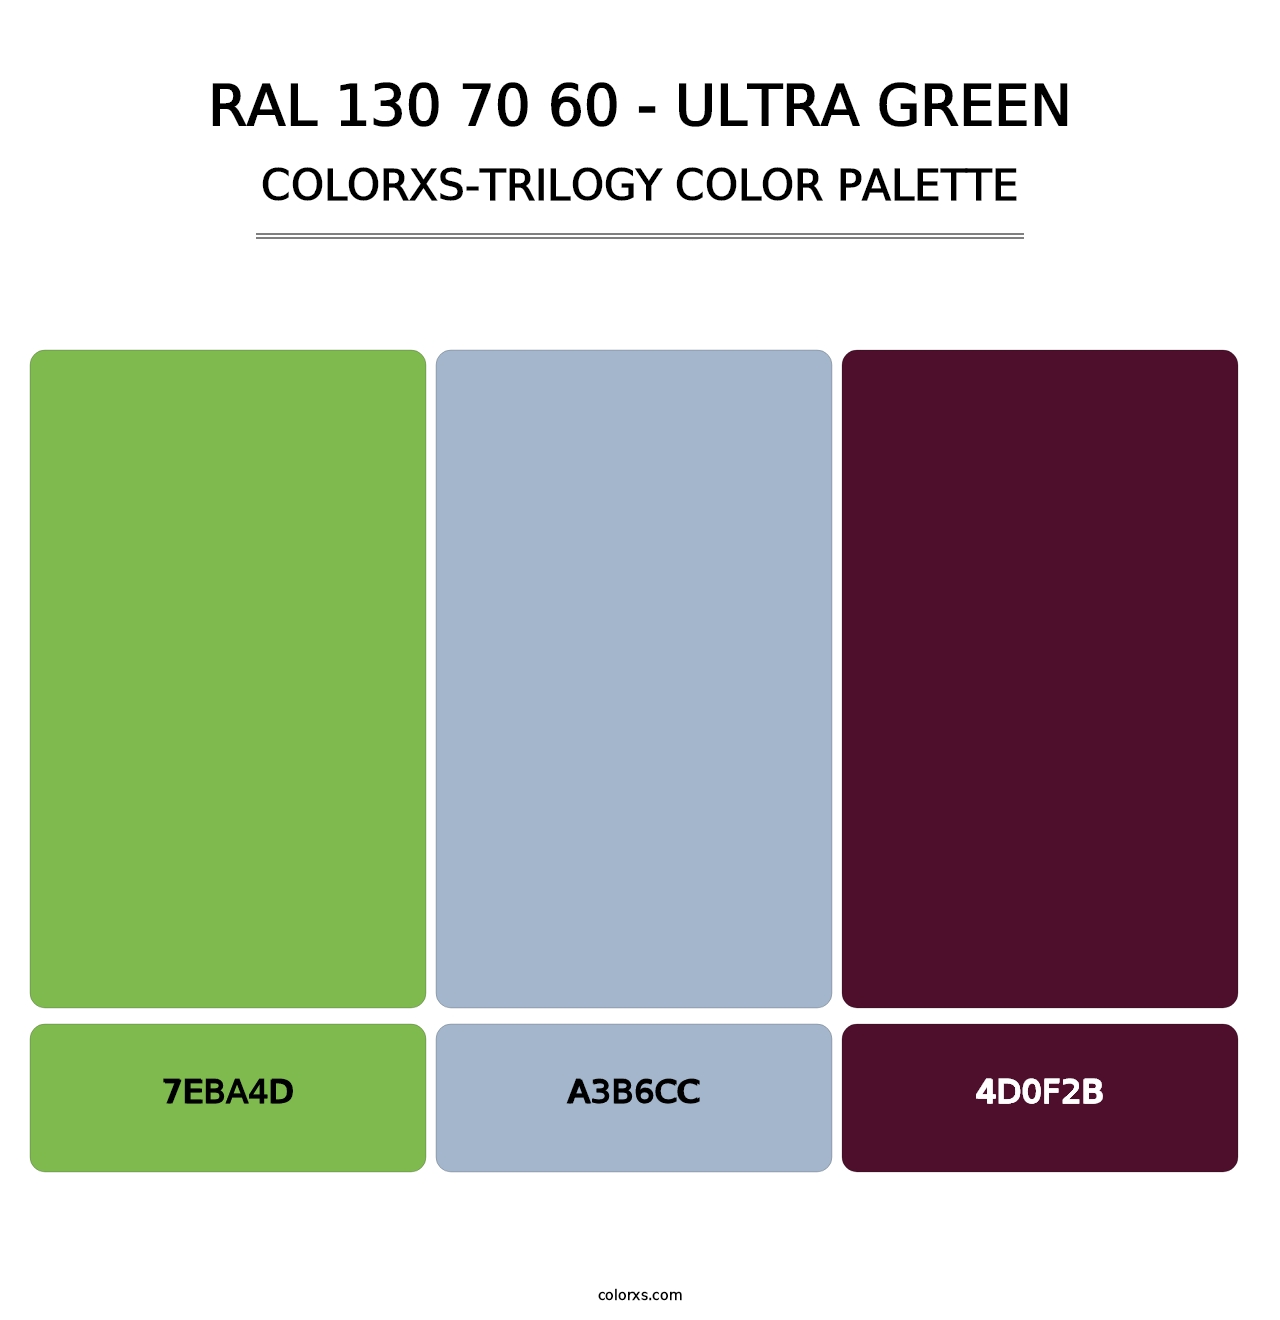 RAL 130 70 60 - Ultra Green - Colorxs Trilogy Palette